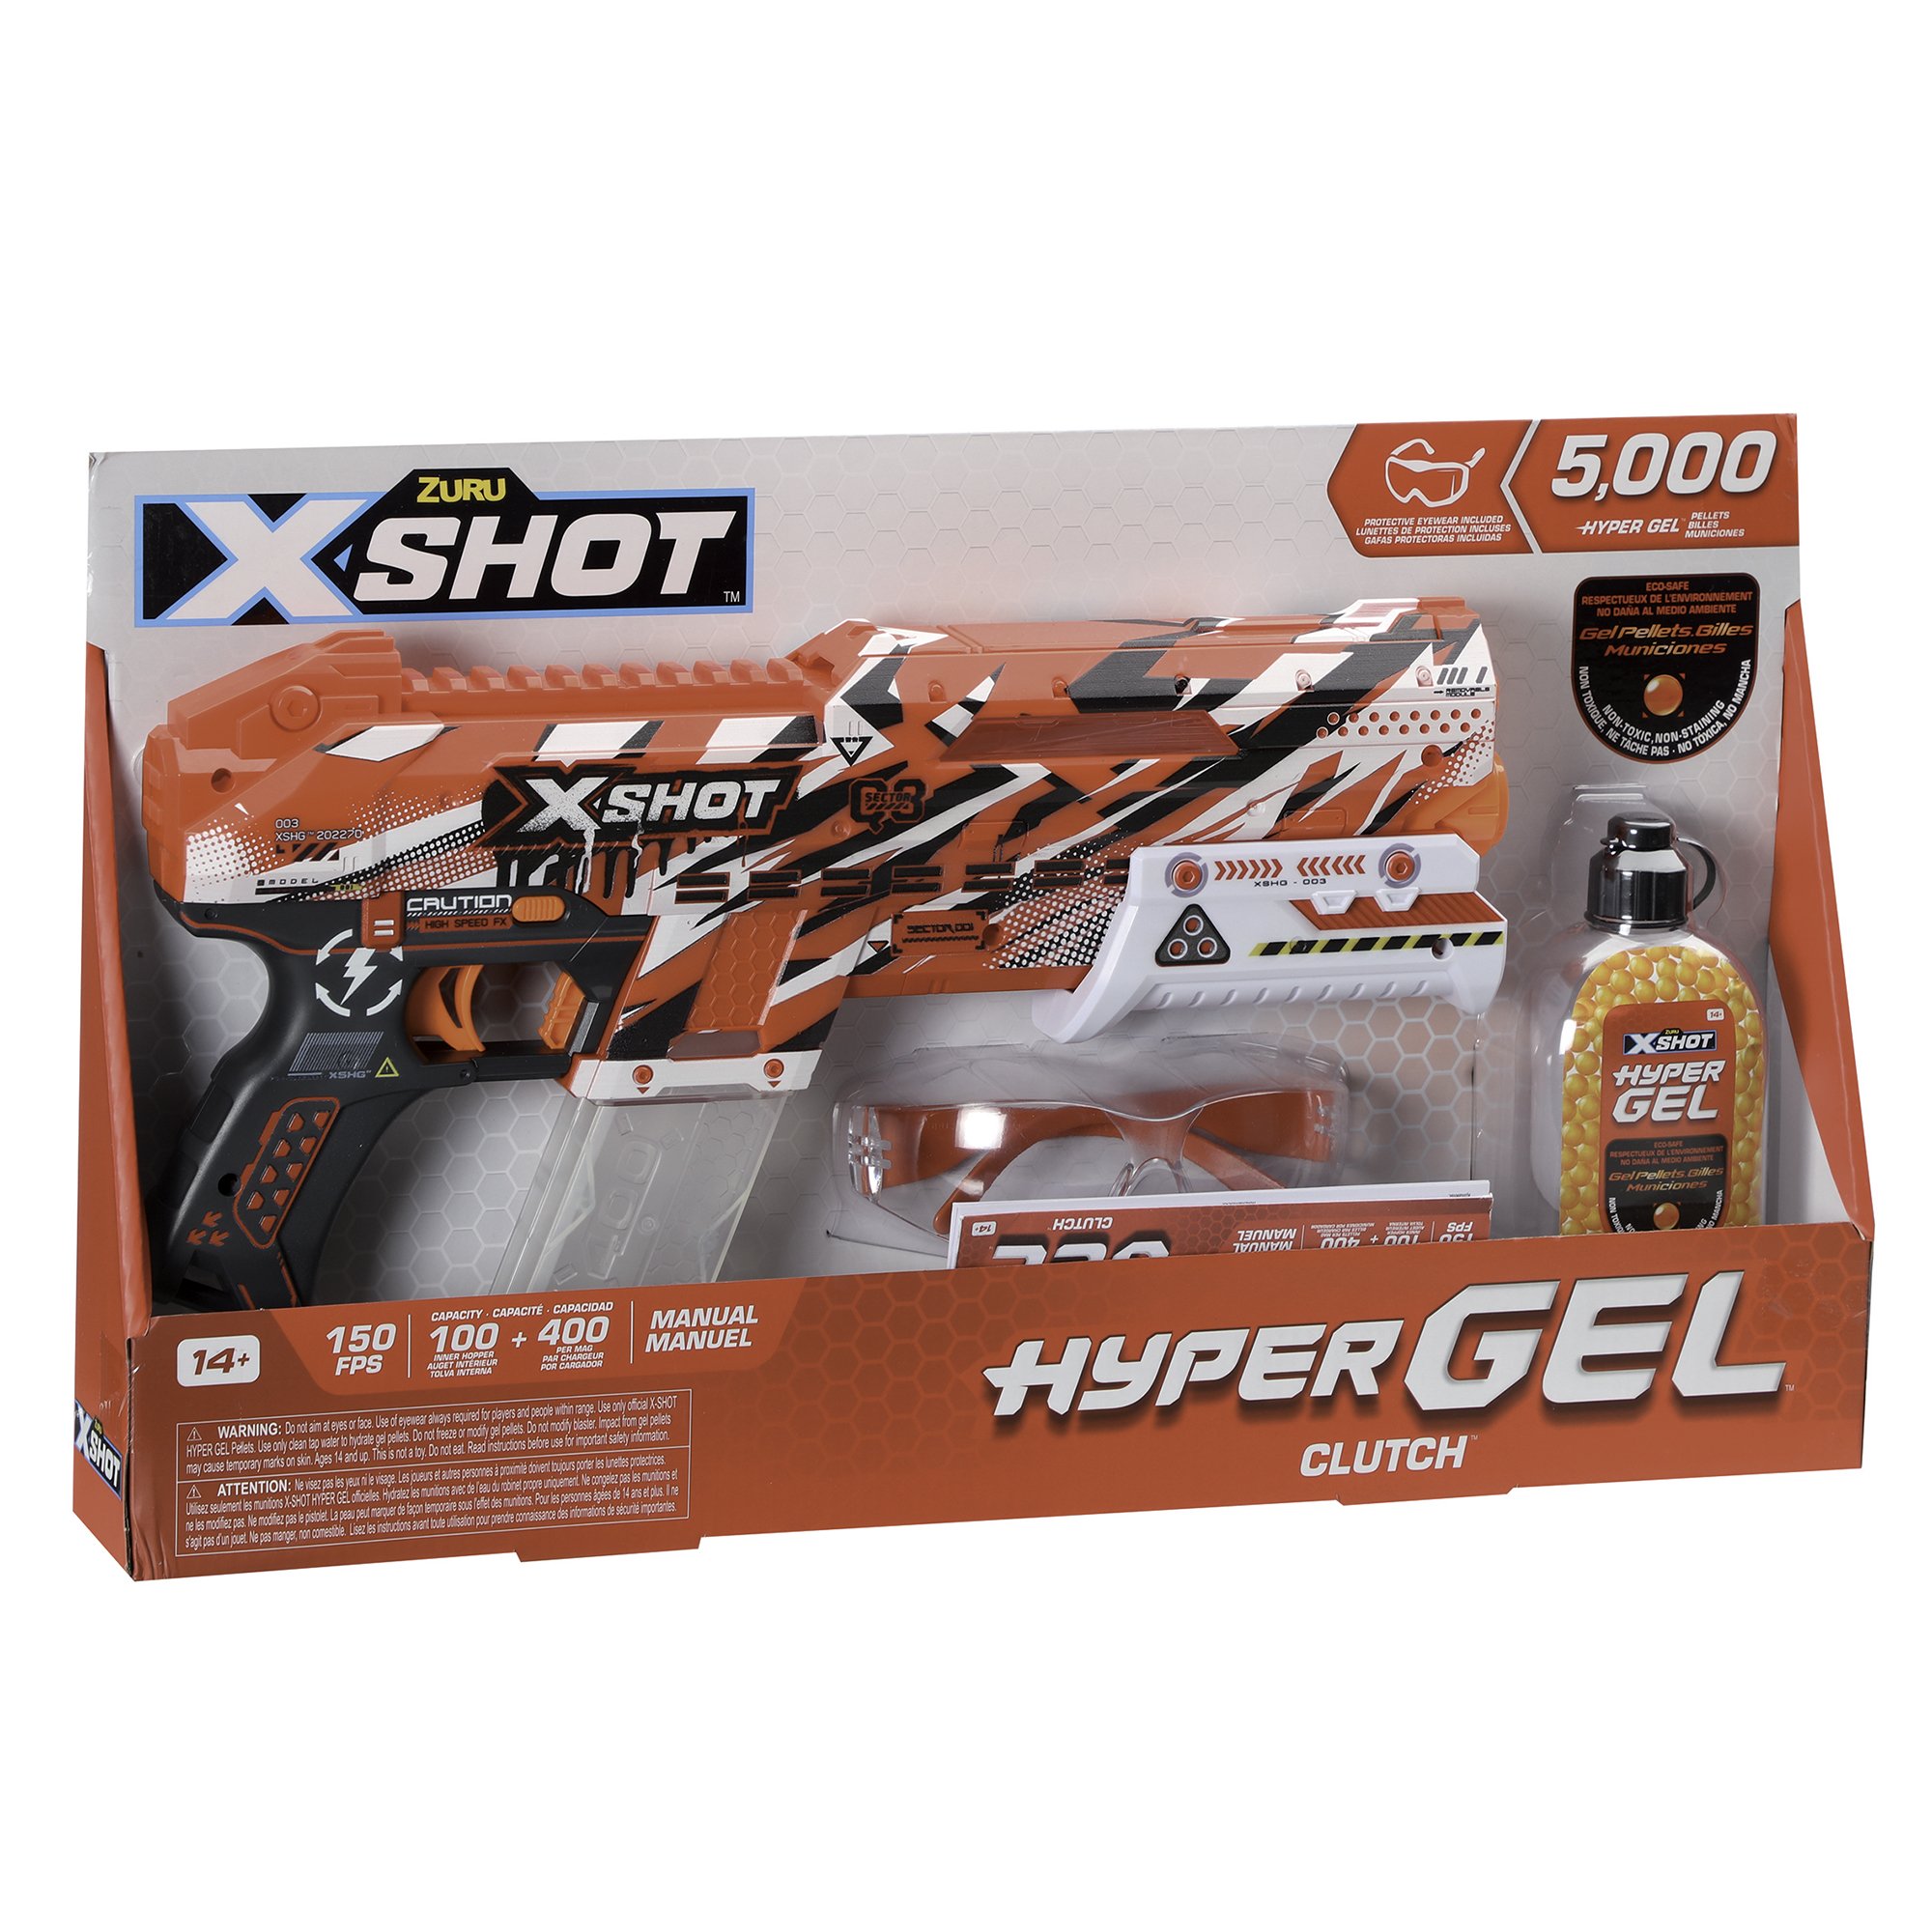 Pistolet X-shot hyper gel ZURU prix pas cher